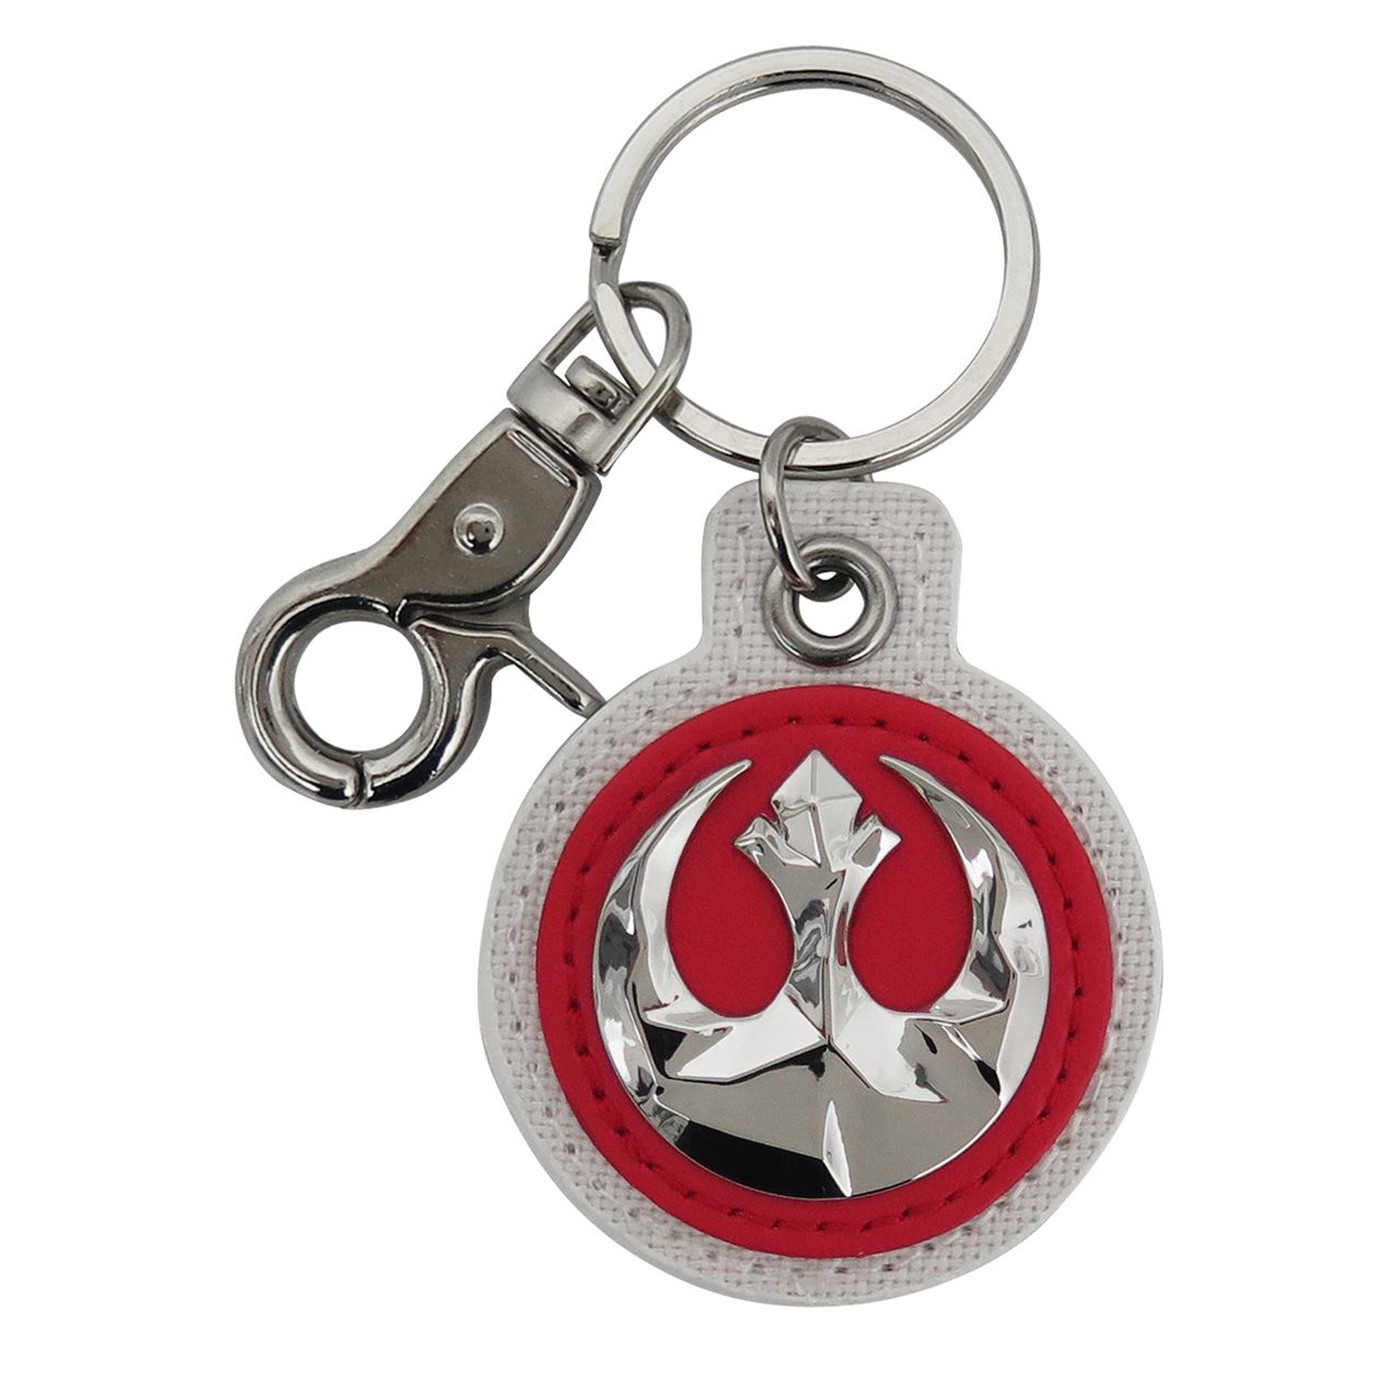 Star Wars The Last Jedi Rebel Alliance Metal Keychain